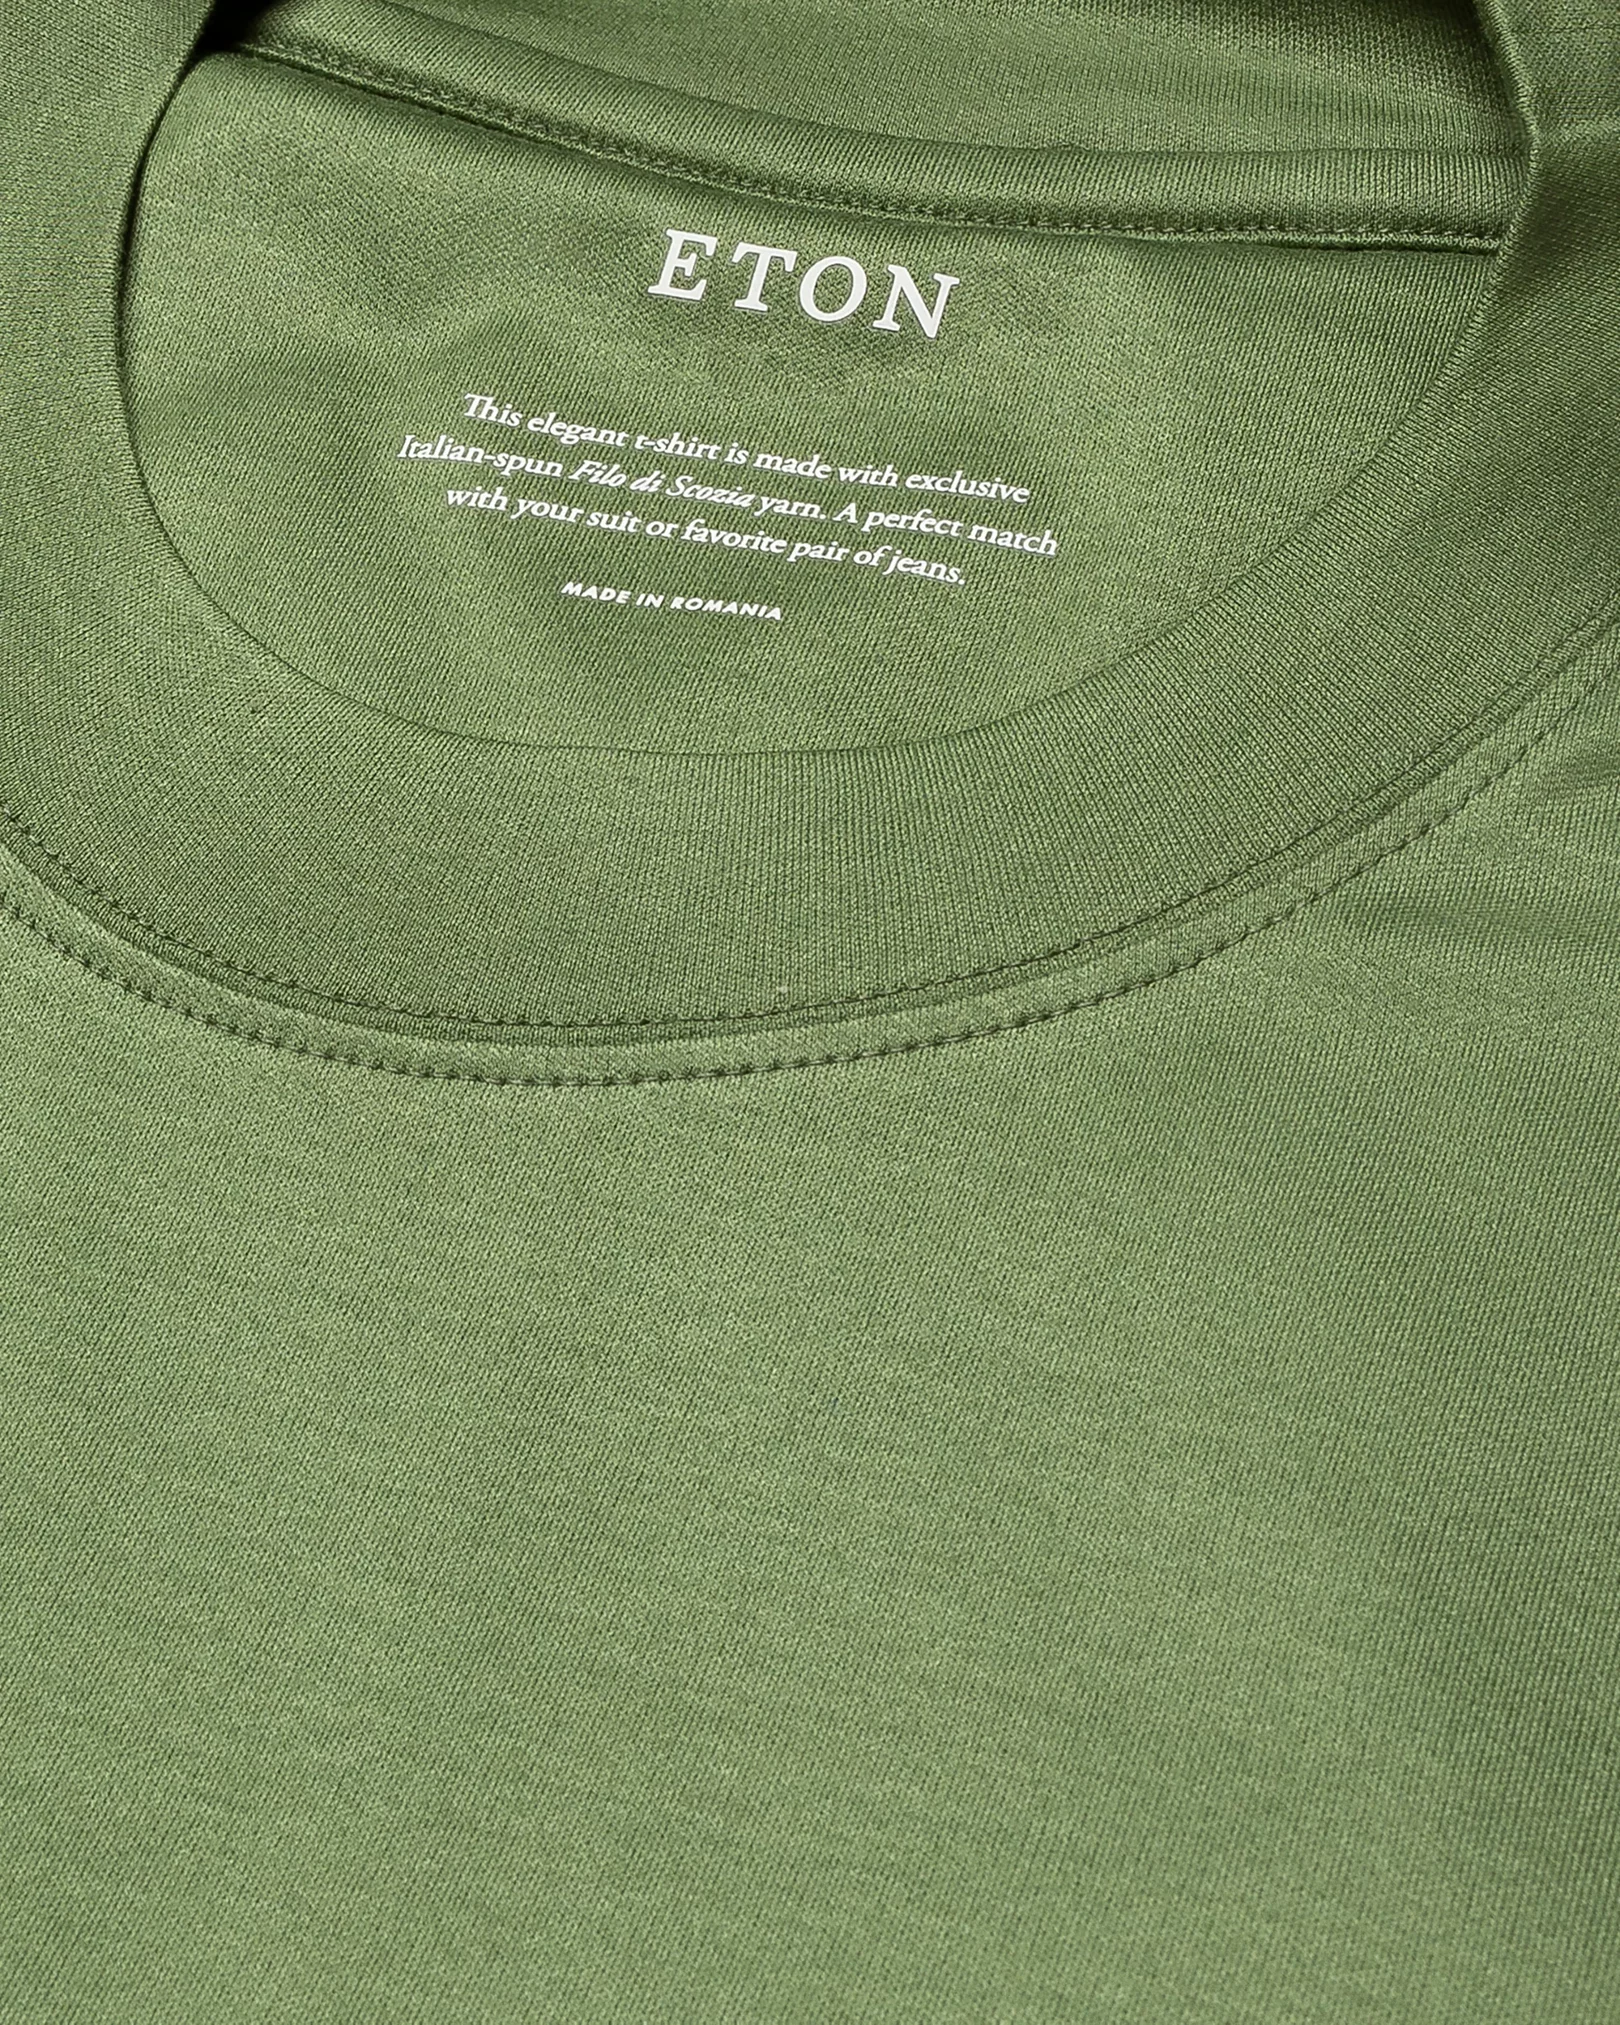 Eton - mid green jersey t shirt short sleeve boxfit t shirt